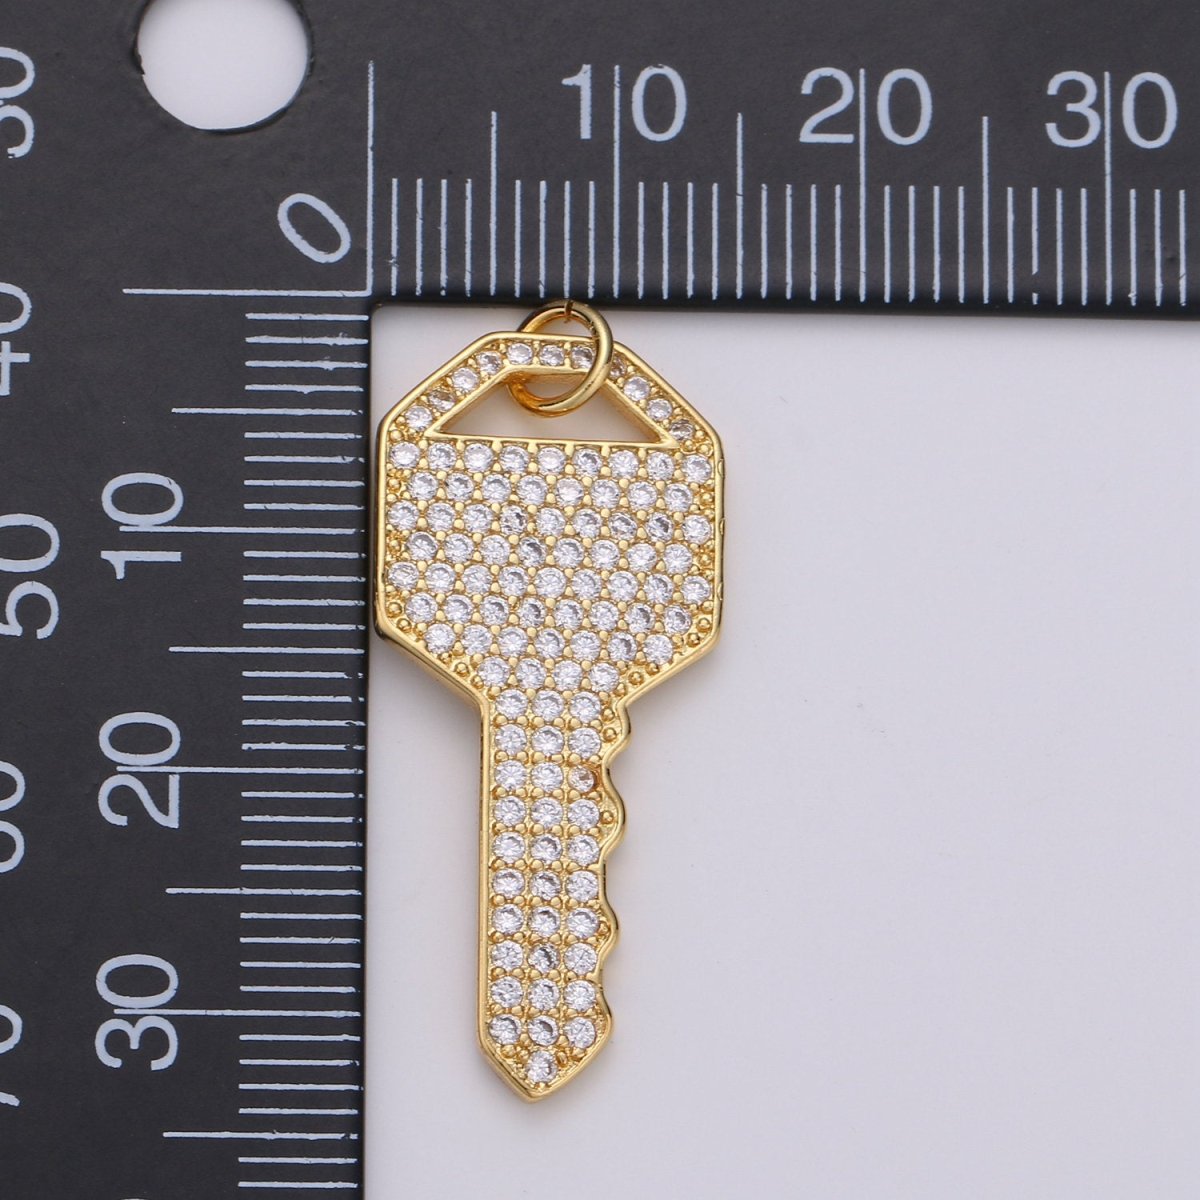 Gold Key CZ Micro Pave Charm Pendant, Key Charm, Key Pendant, Key Necklace, Charm Bracelet, Cubic Zirconia, Charm, 34x15mm D-340 - DLUXCA